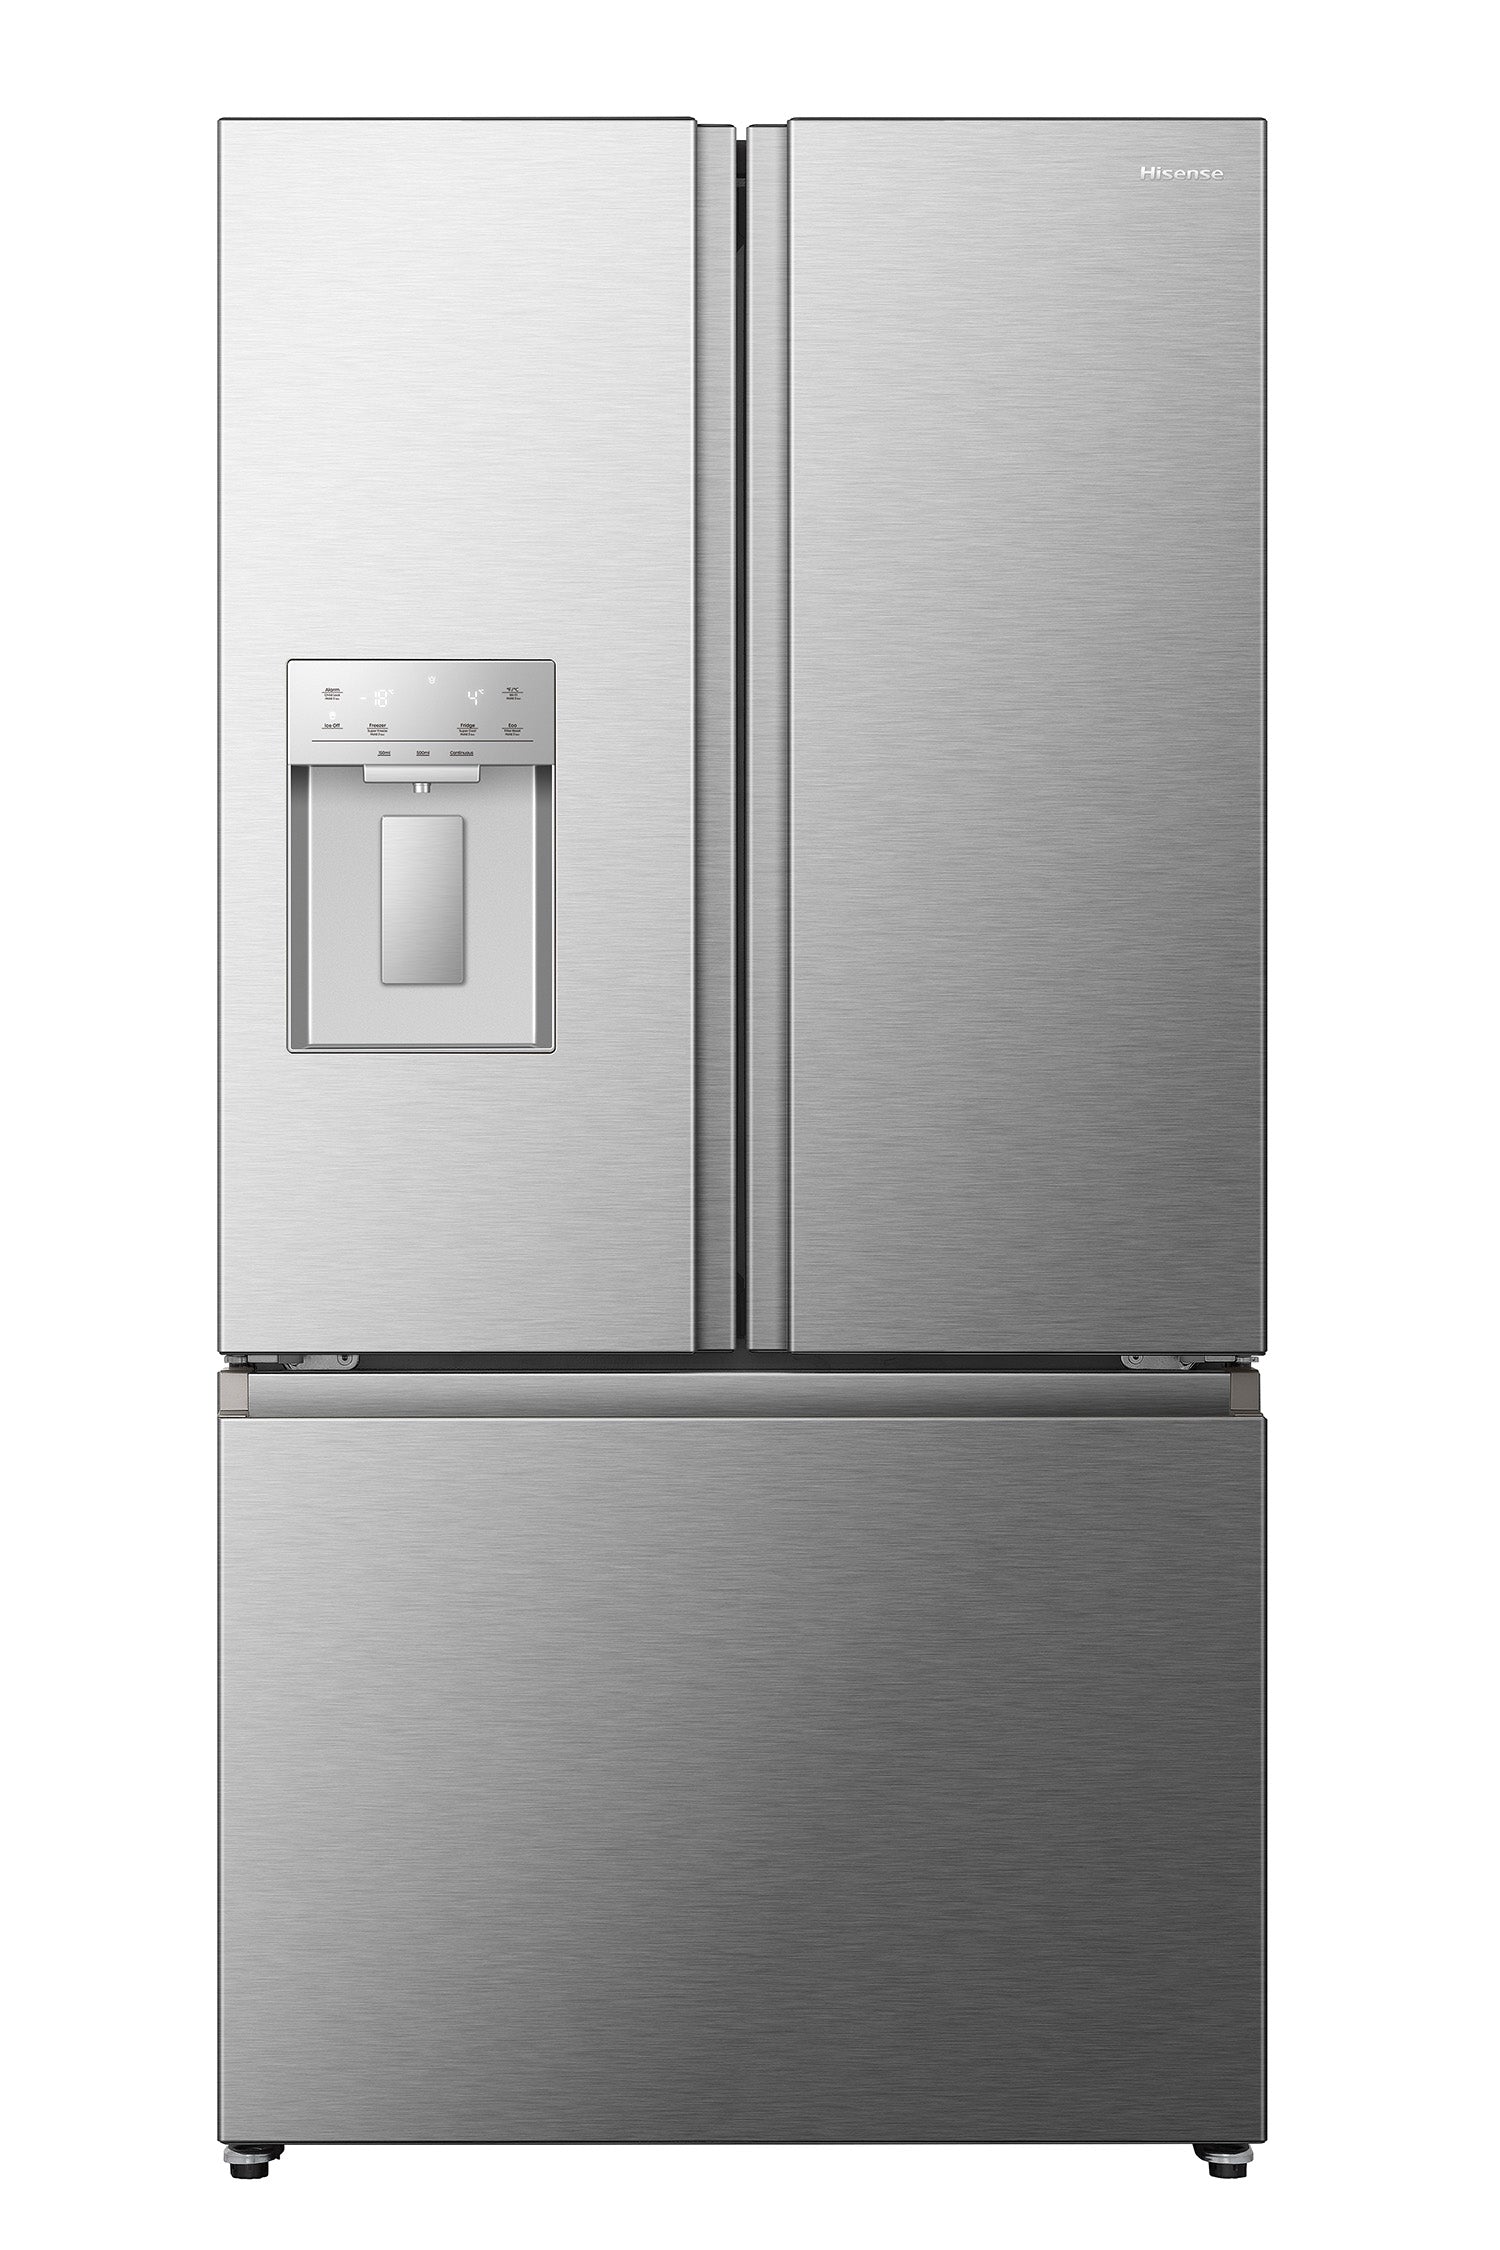 Hisense - 35.75 Inch 22.4 cu. ft French Door Refrigerator in Stainless - RF225C3CSEI